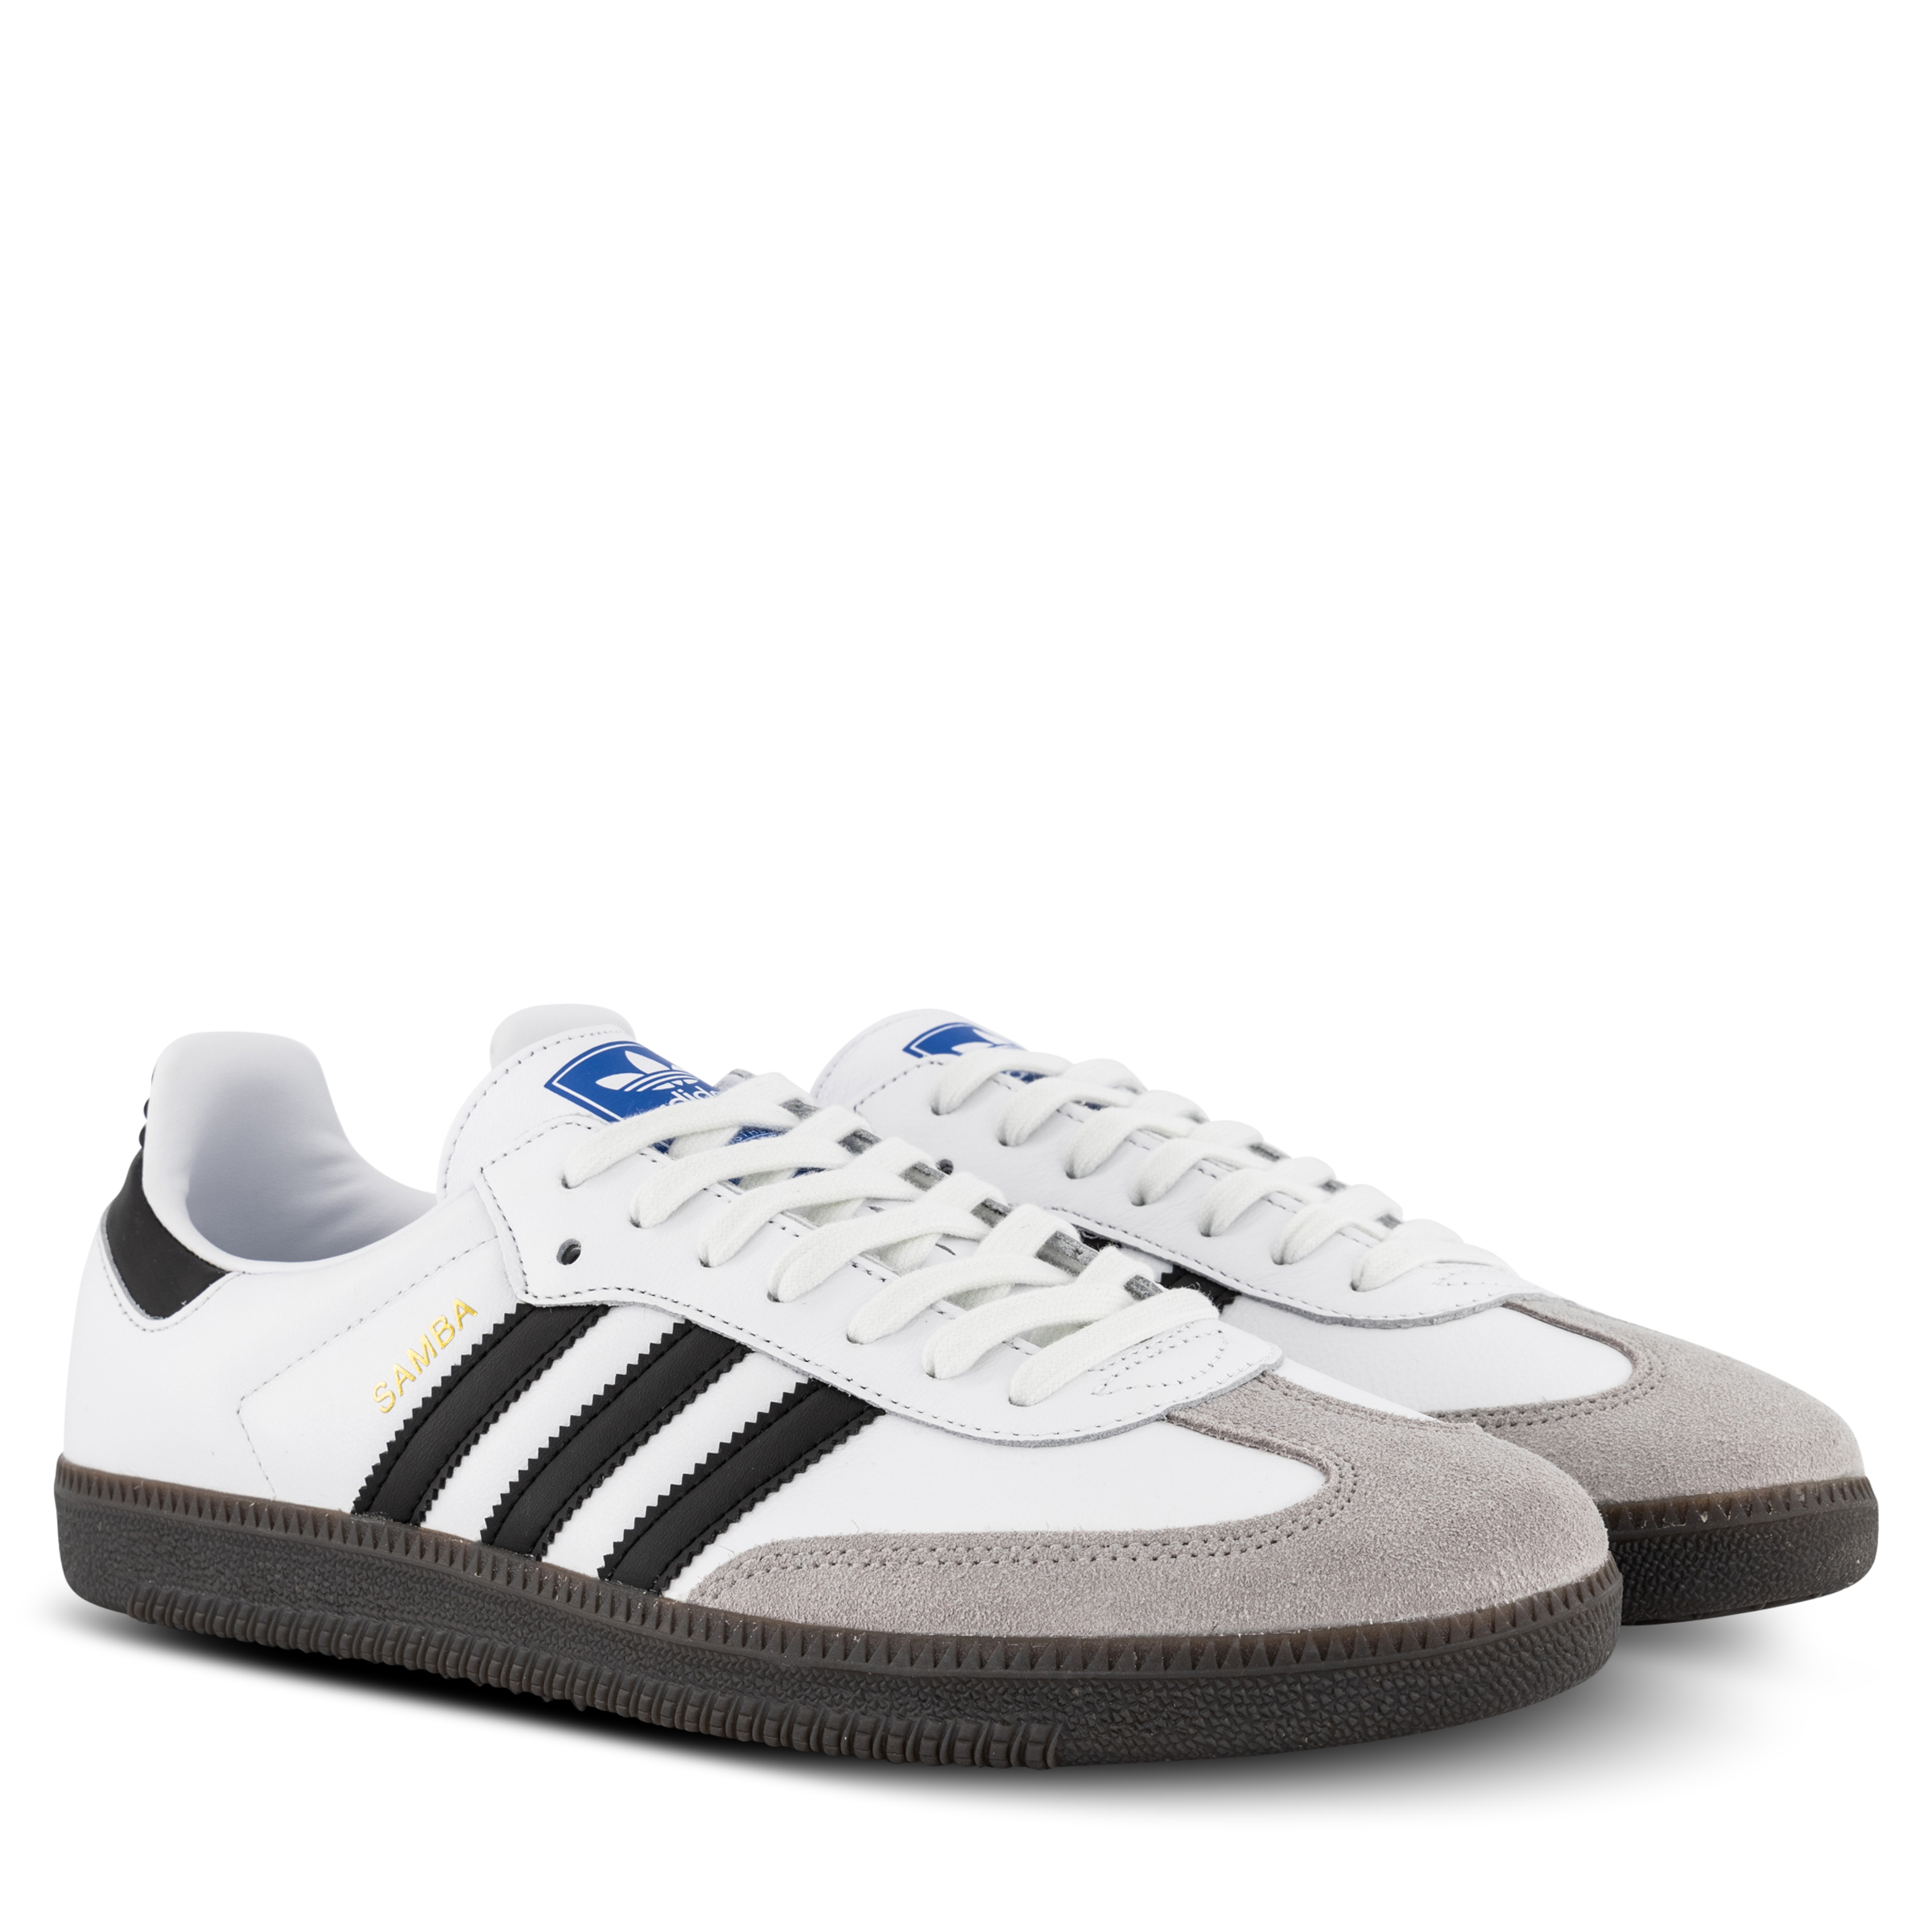 Adidas Men's Samba Shoes Black/White 10.5